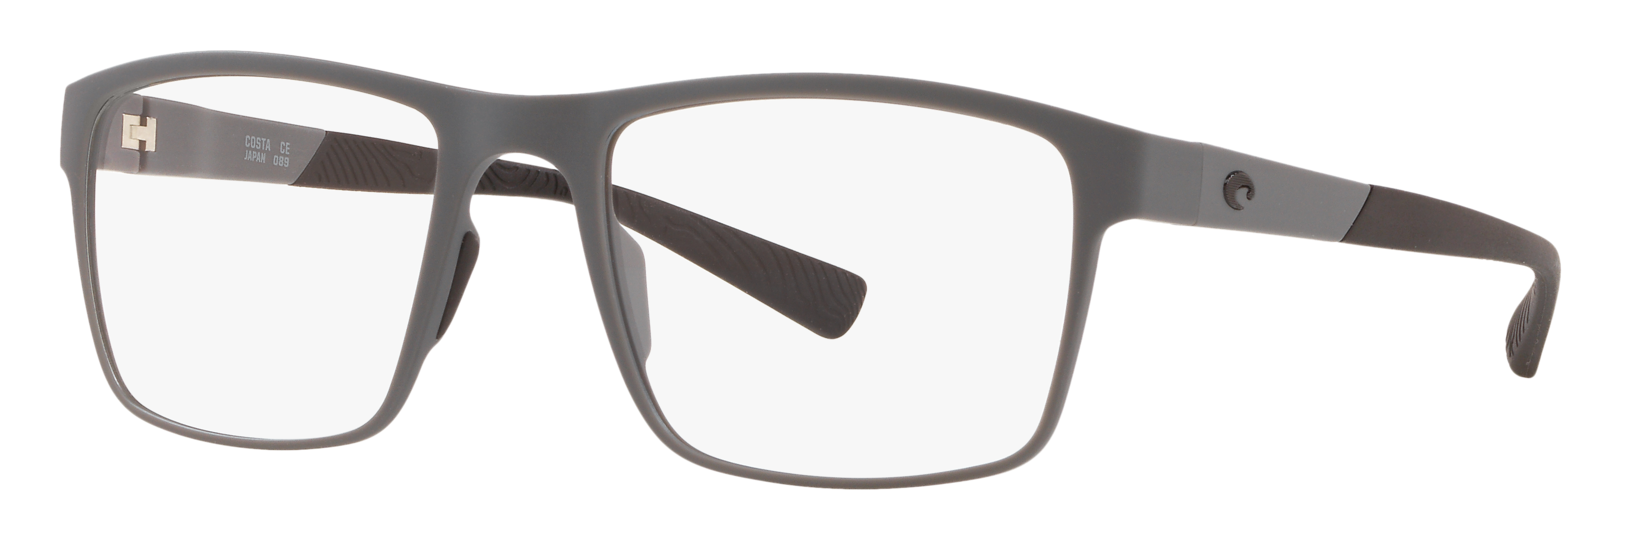 Costa Ocean Ridge 200 men's gaming glasses. Matte gray frame with clear square lenses.